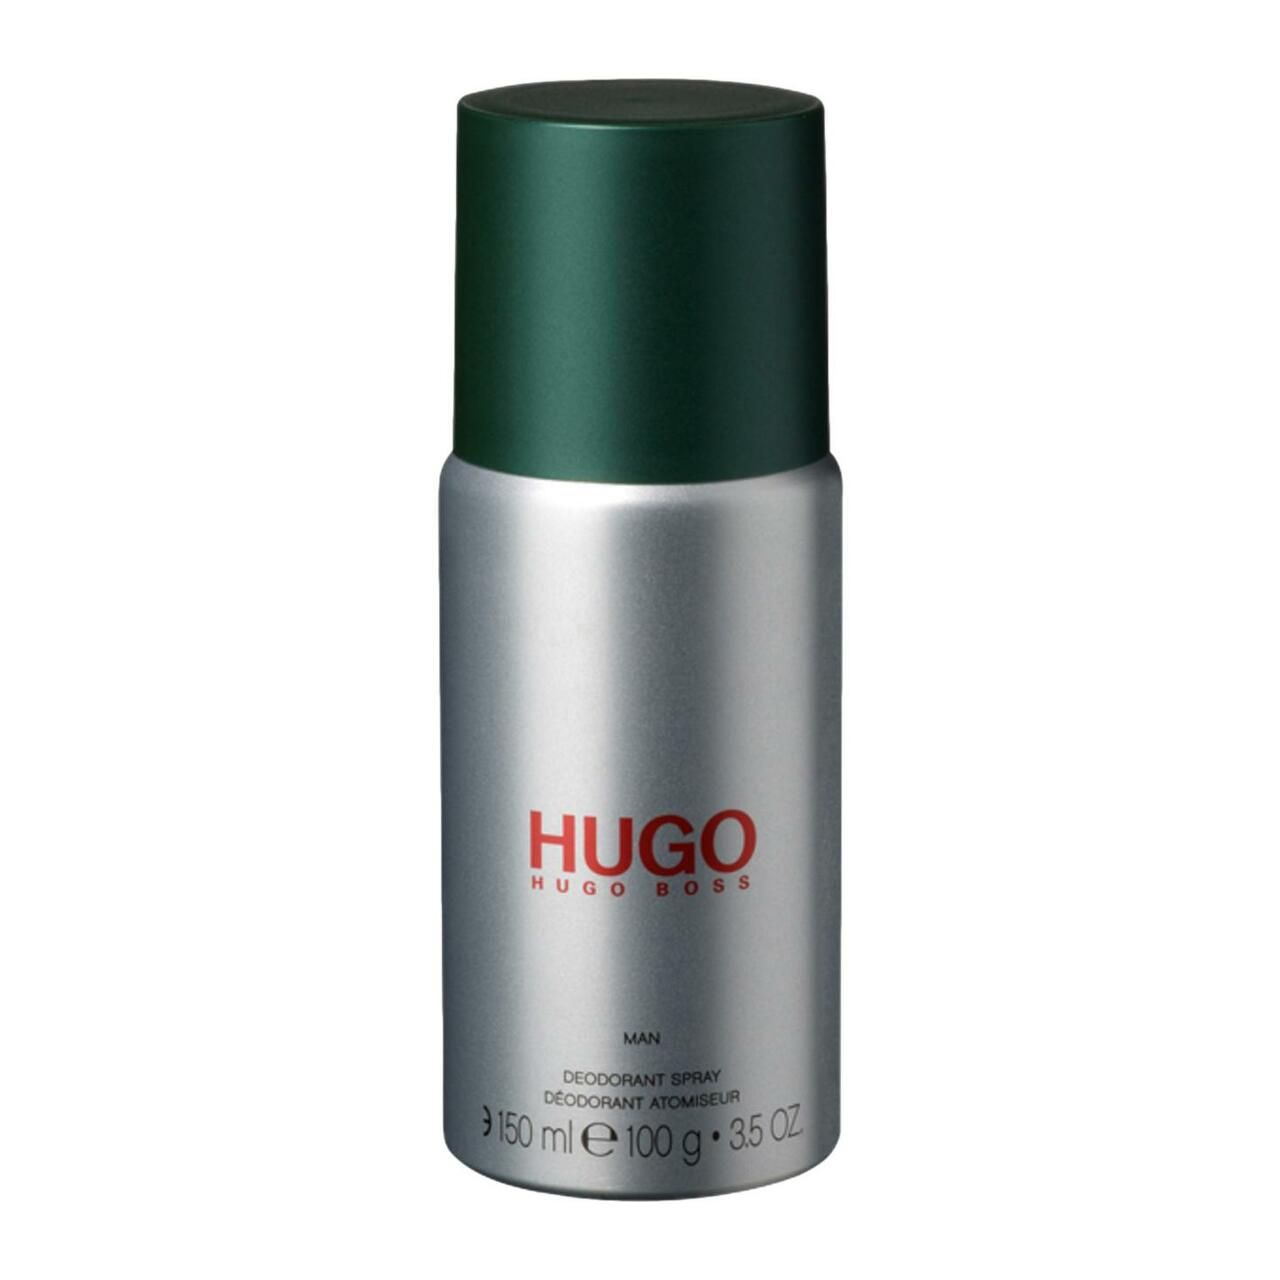 Hugo - Hugo Boss, Man Deodorant Spray